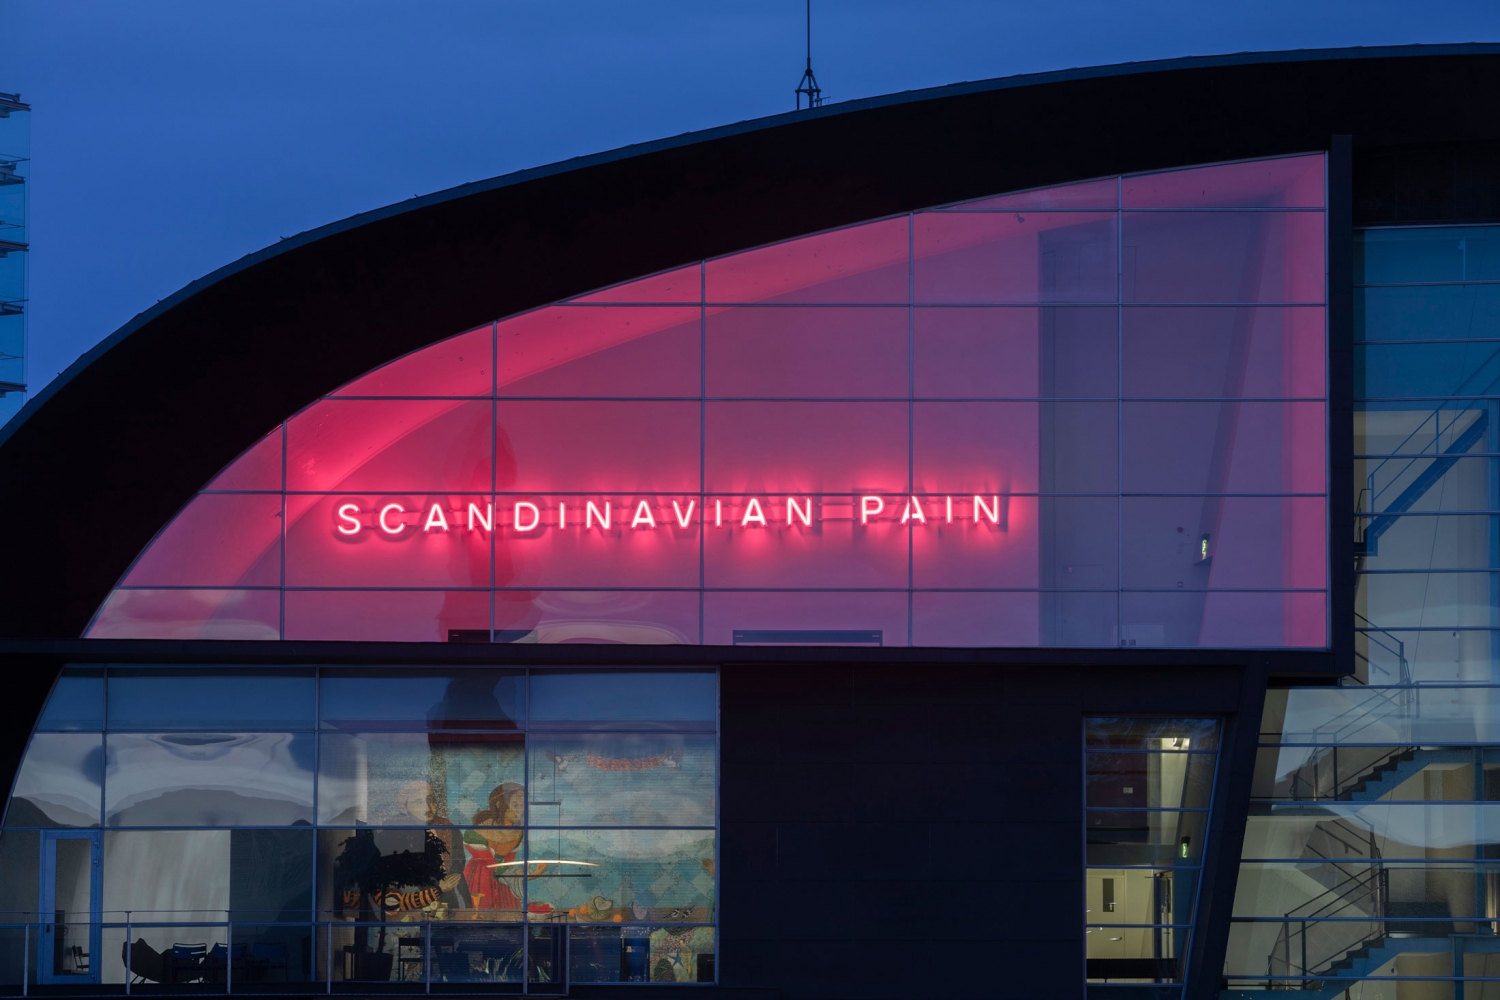 Ragnar Kjartansson Scandinavian Pain, 2006